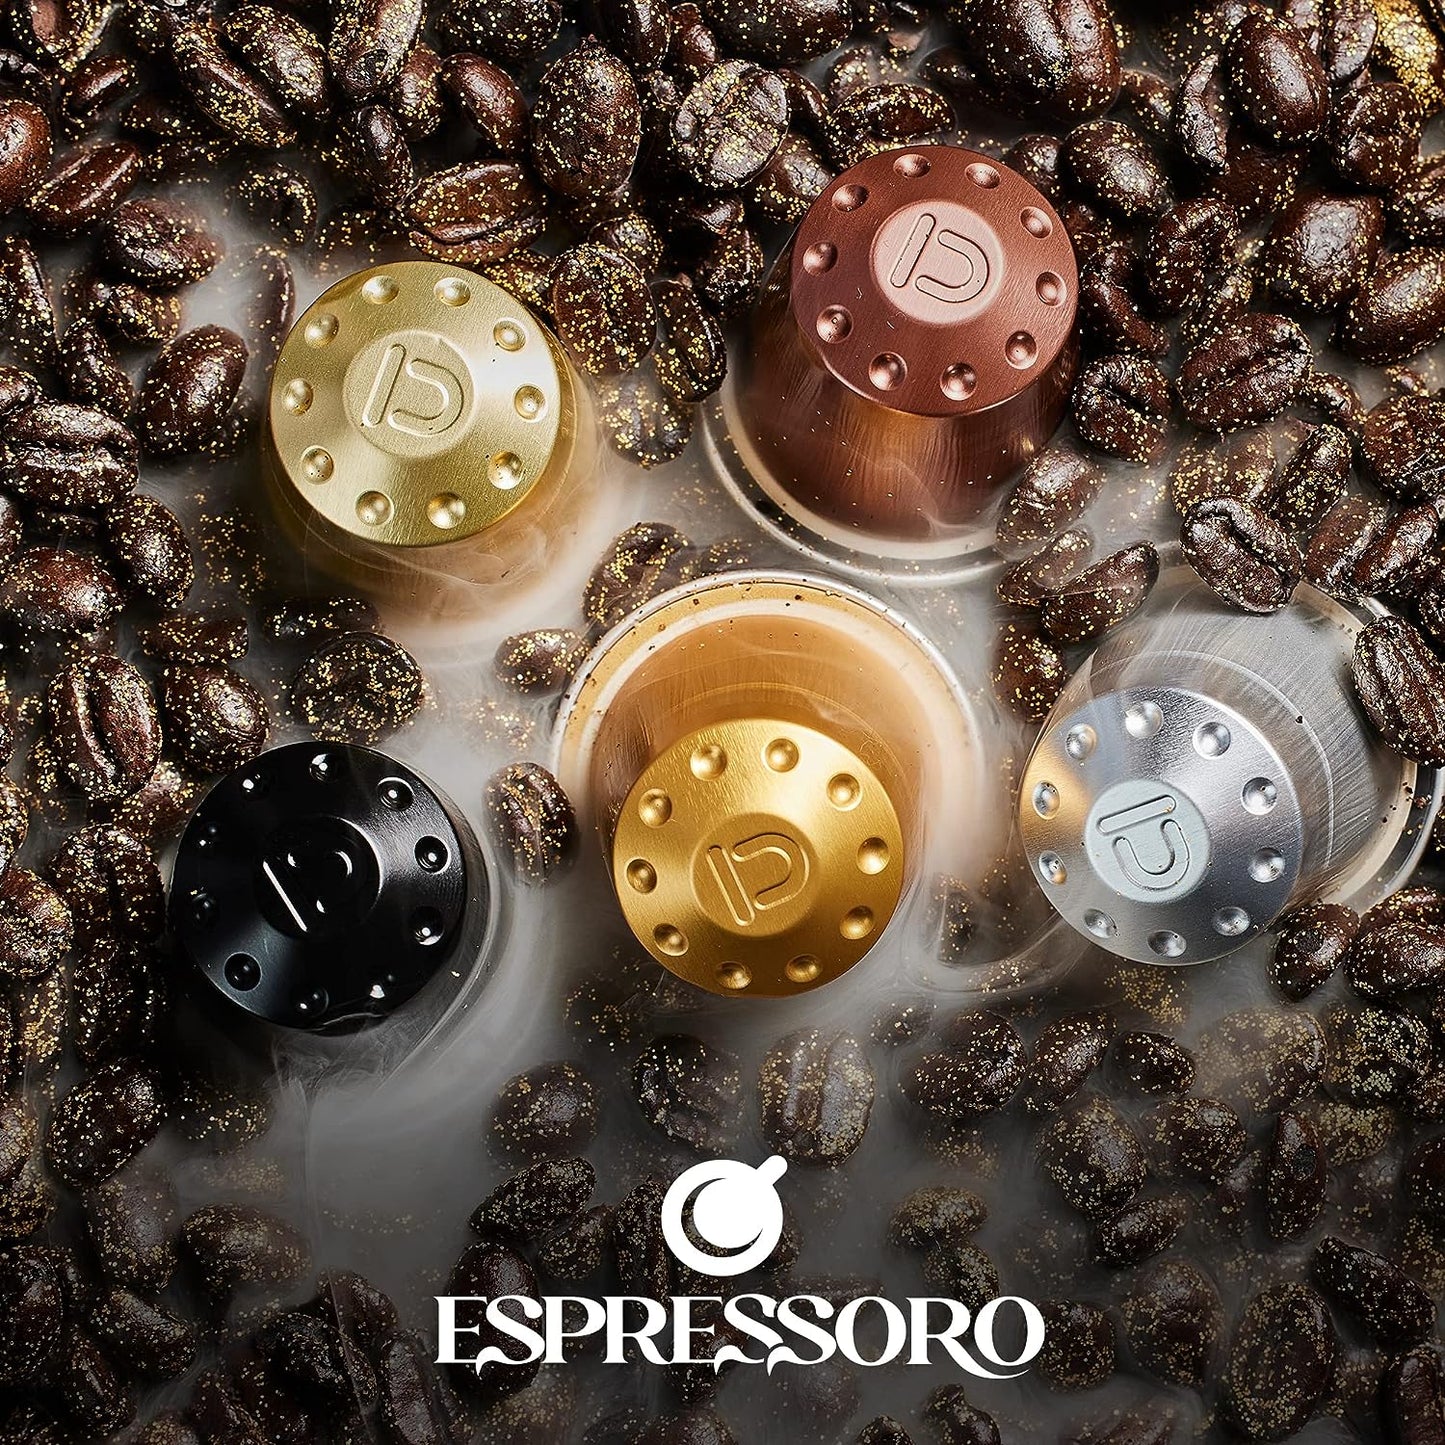 ESPRESSORO Organic Aluminum Nespresso Compatible Capsules -100 Count ORO BIANCO blend- Capsules compatible with Nespresso Original line machines Organic Italian Coffee